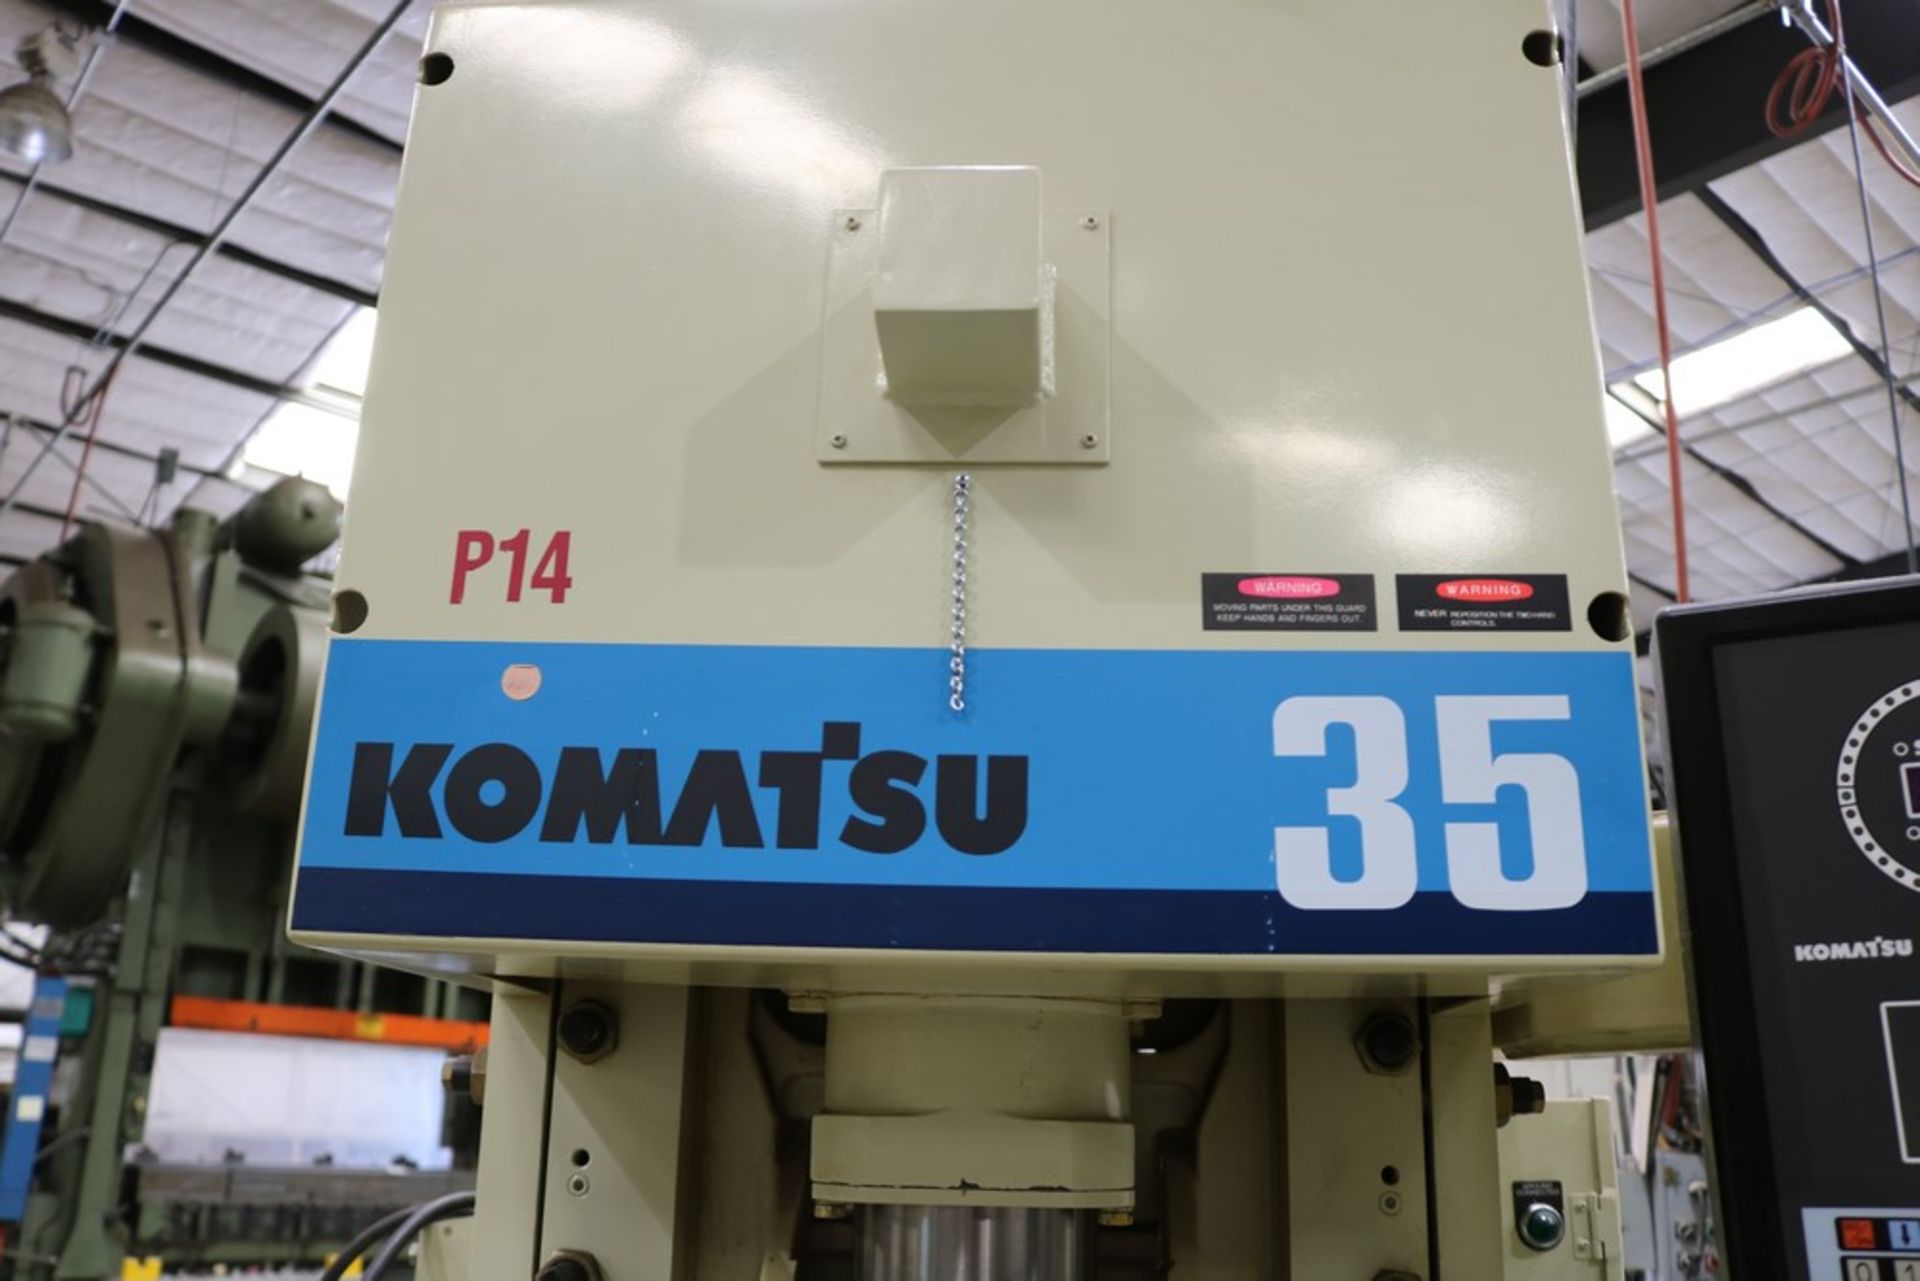 1999 Komatsu 35 Ton Punch Press, Air Clutch, Light Curtains, Komatsu Control/Pedestal Control, PA - Image 12 of 21